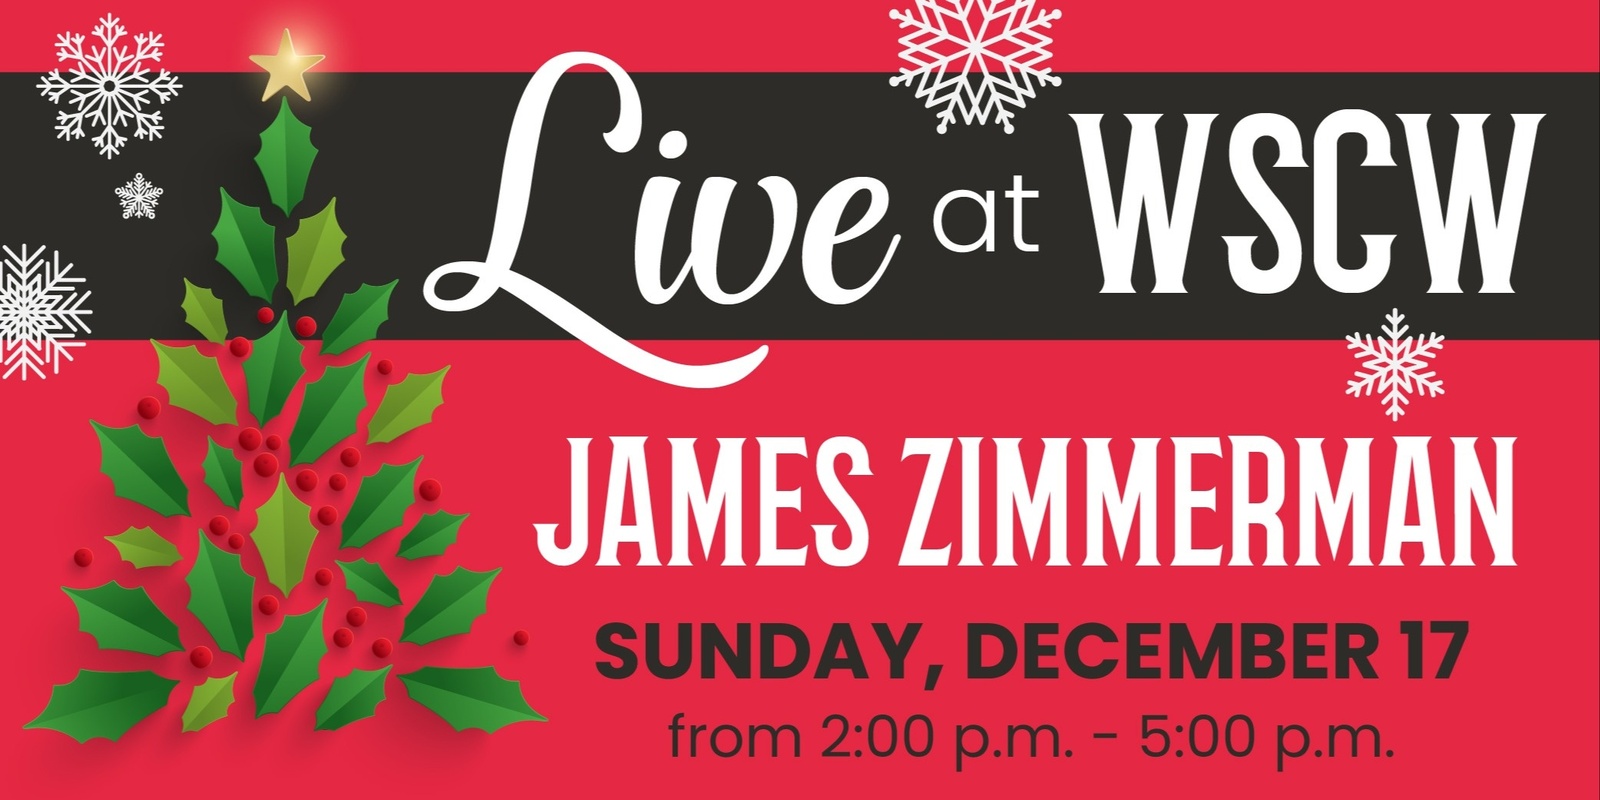 Banner image for James Zimmerman Live at WSCW December 17